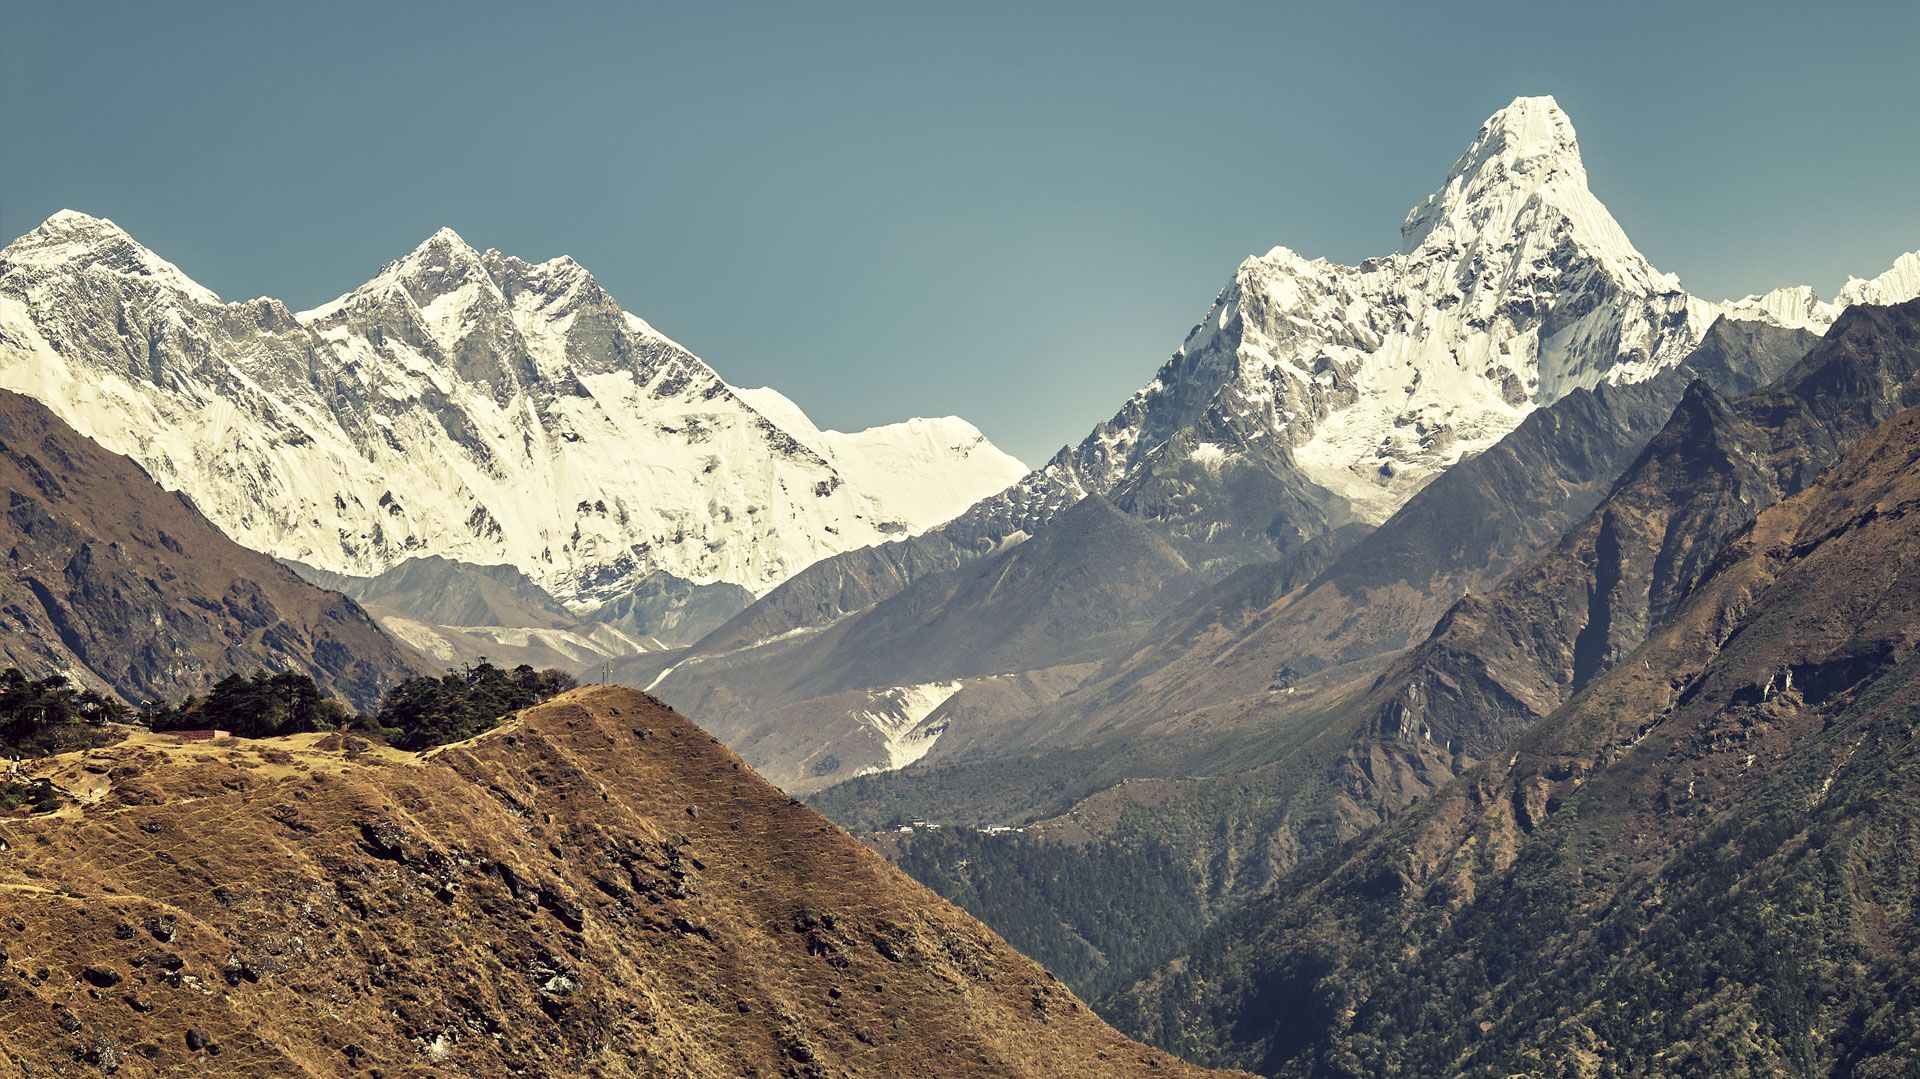 Mount Everest and Mount Ama Dablam